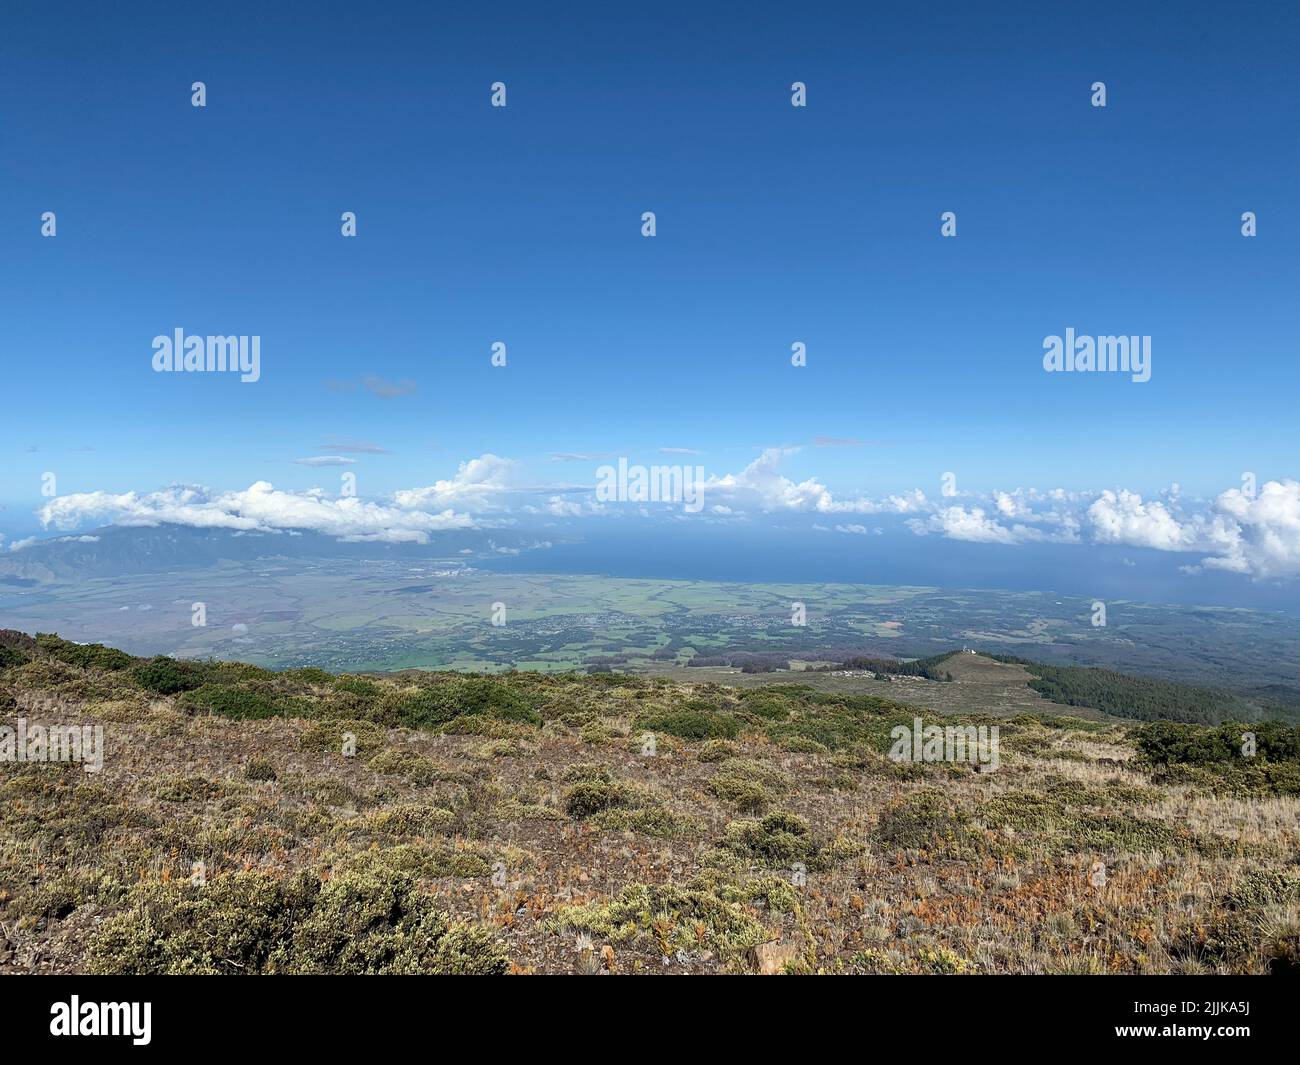 A scenic landscape on the Hawaiian island of Maui, USA Stock Photo